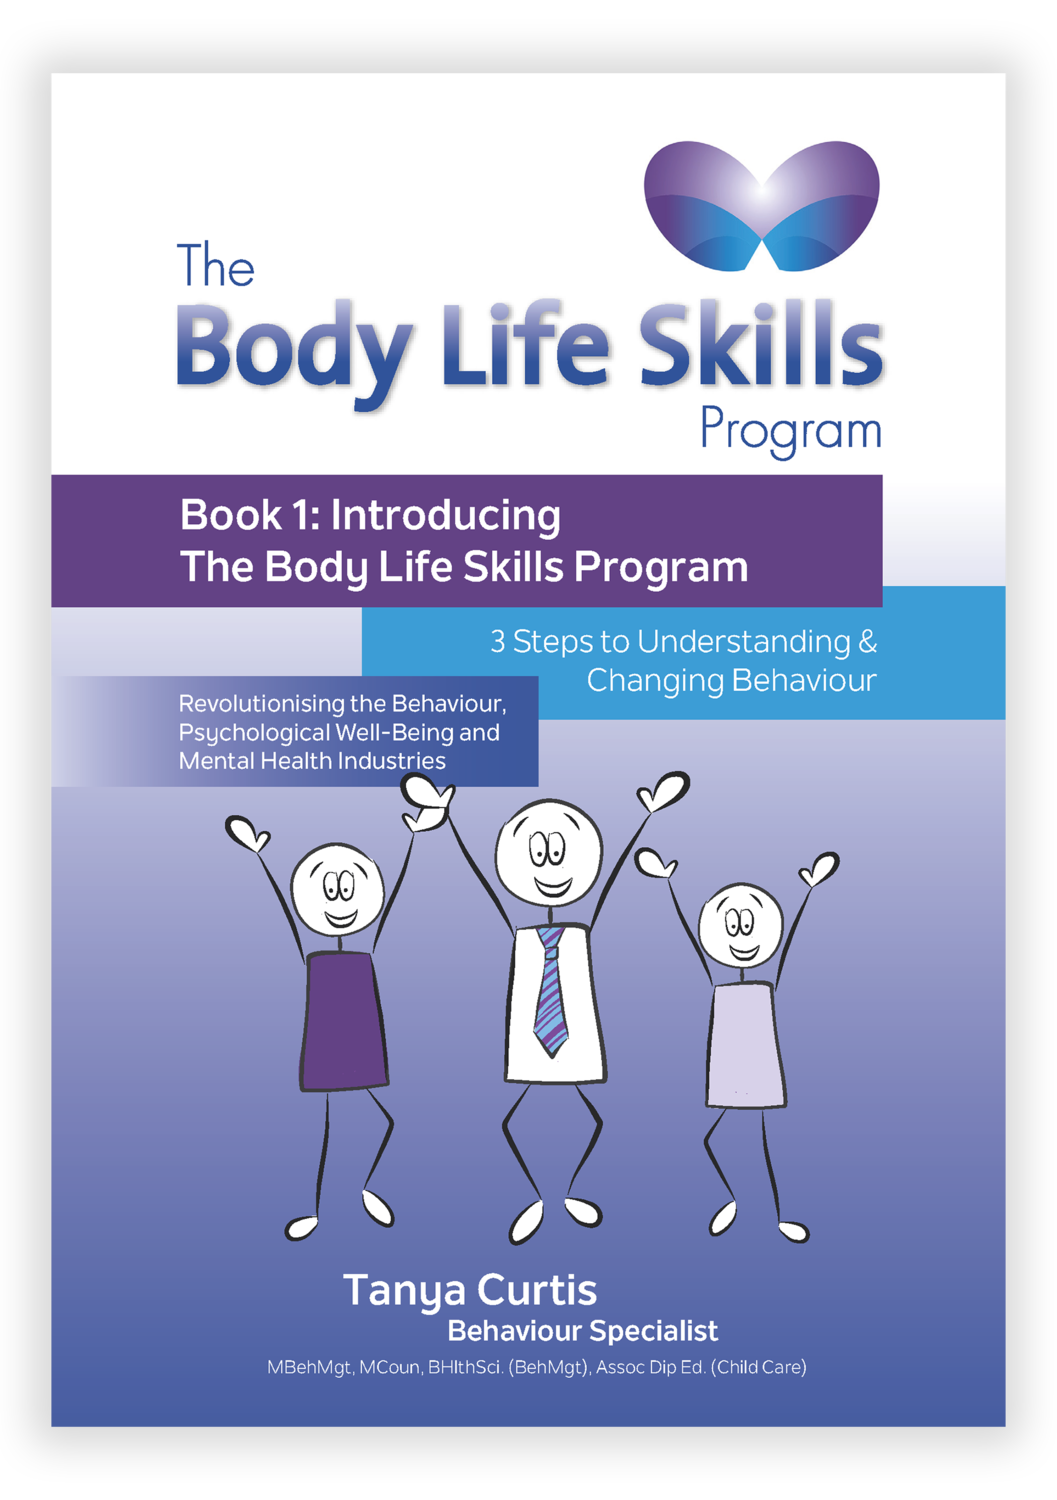 The Body Life Skills Program: Book 1